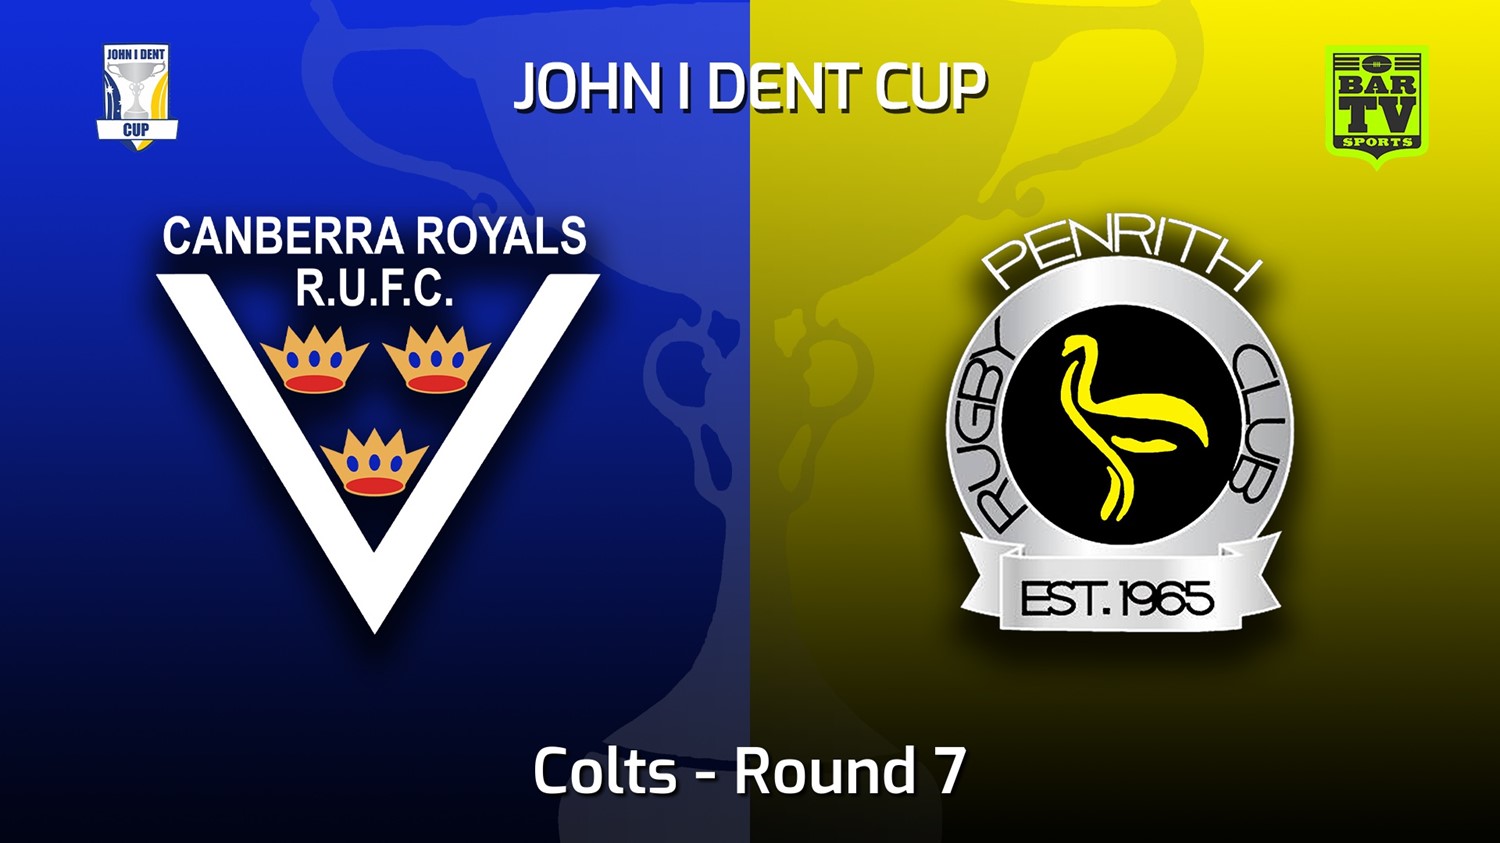 220604-John I Dent (ACT) Round 7 - Colts - Canberra Royals v Penrith Emus Slate Image